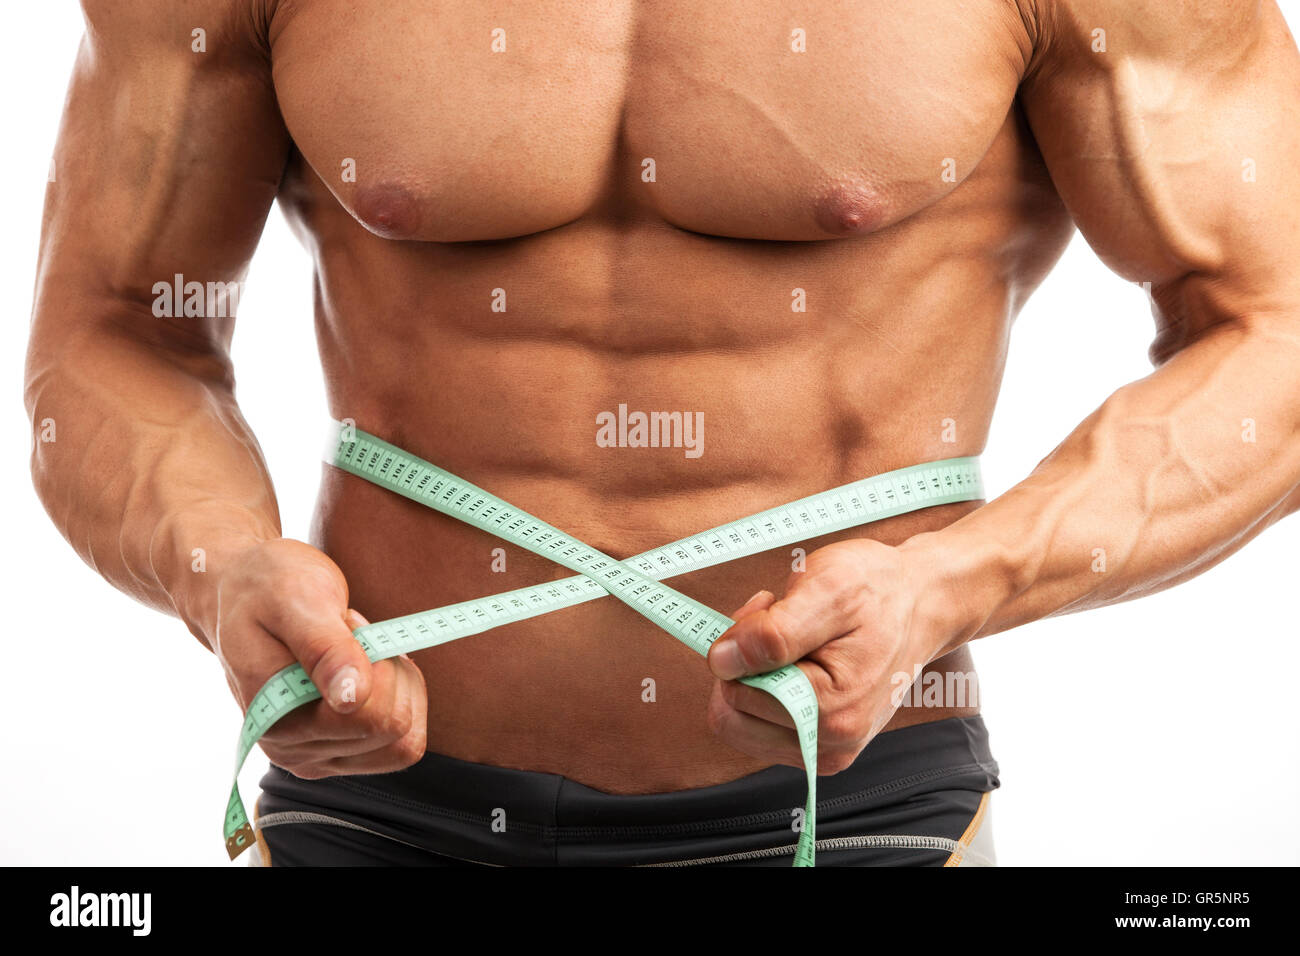 https://c8.alamy.com/comp/GR5NR5/closeup-of-muscular-man-with-measuring-tape-GR5NR5.jpg